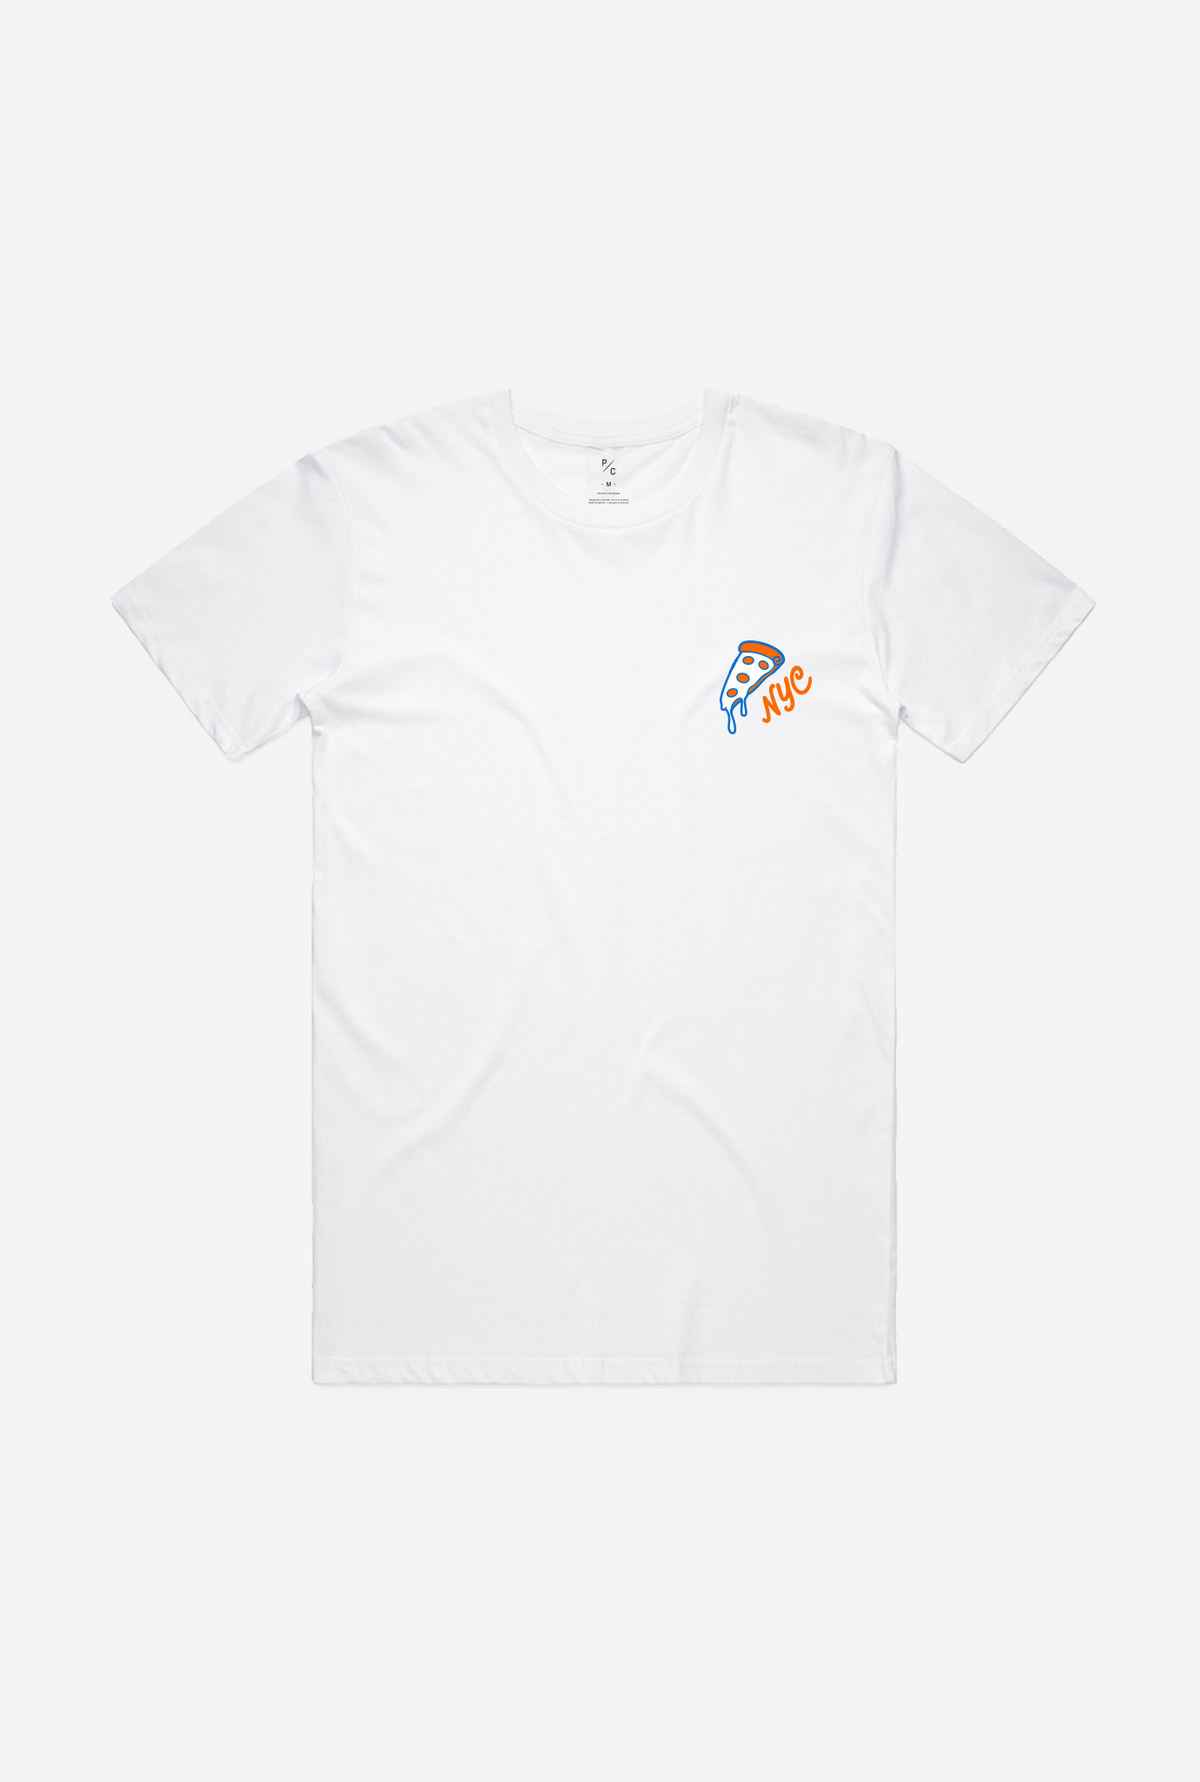 New York City Pizza T-Shirt - White